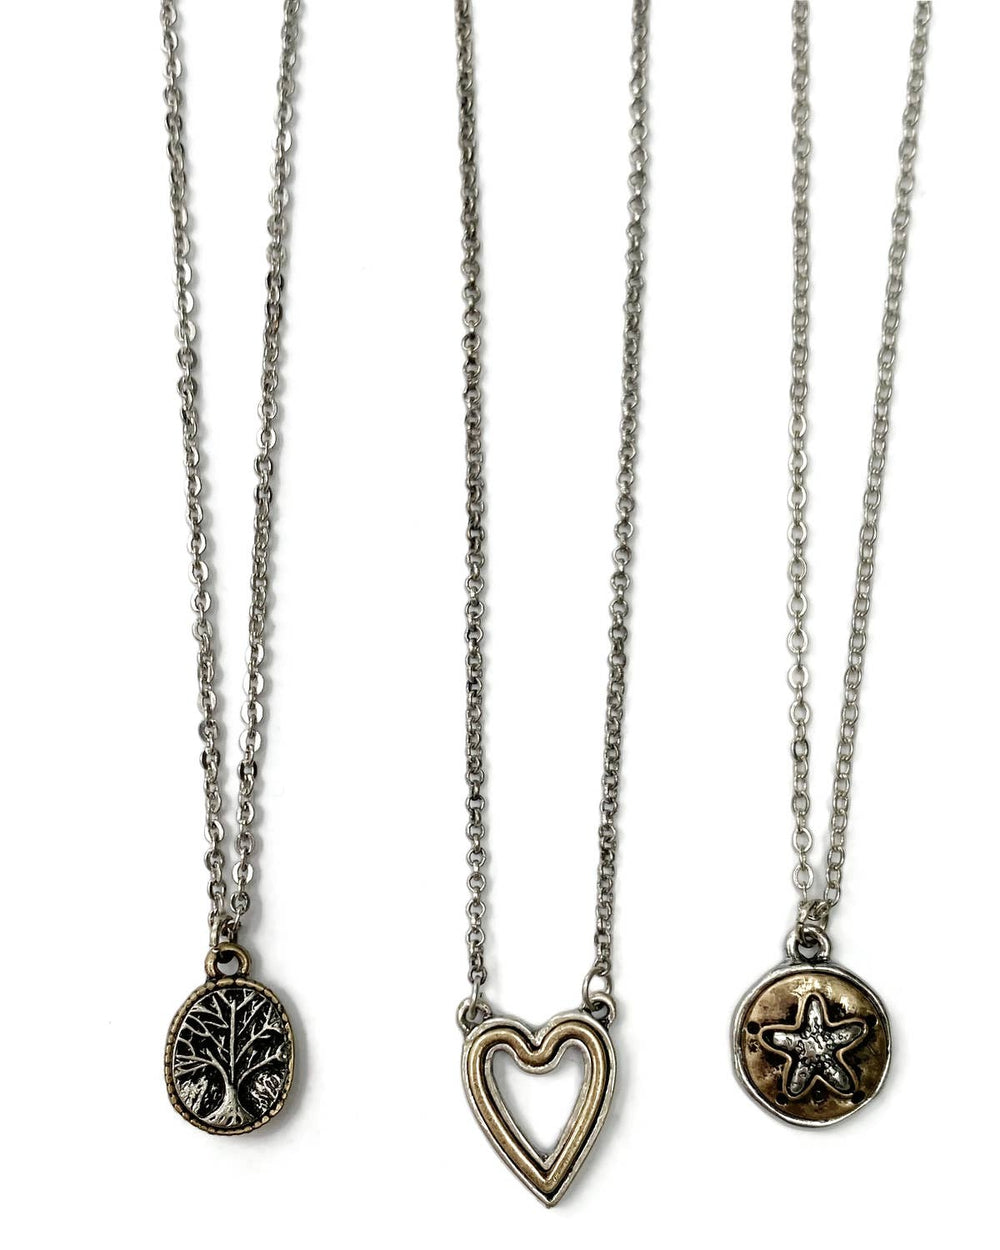 Antique Gold & Silver Nature Theme Charm Necklaces